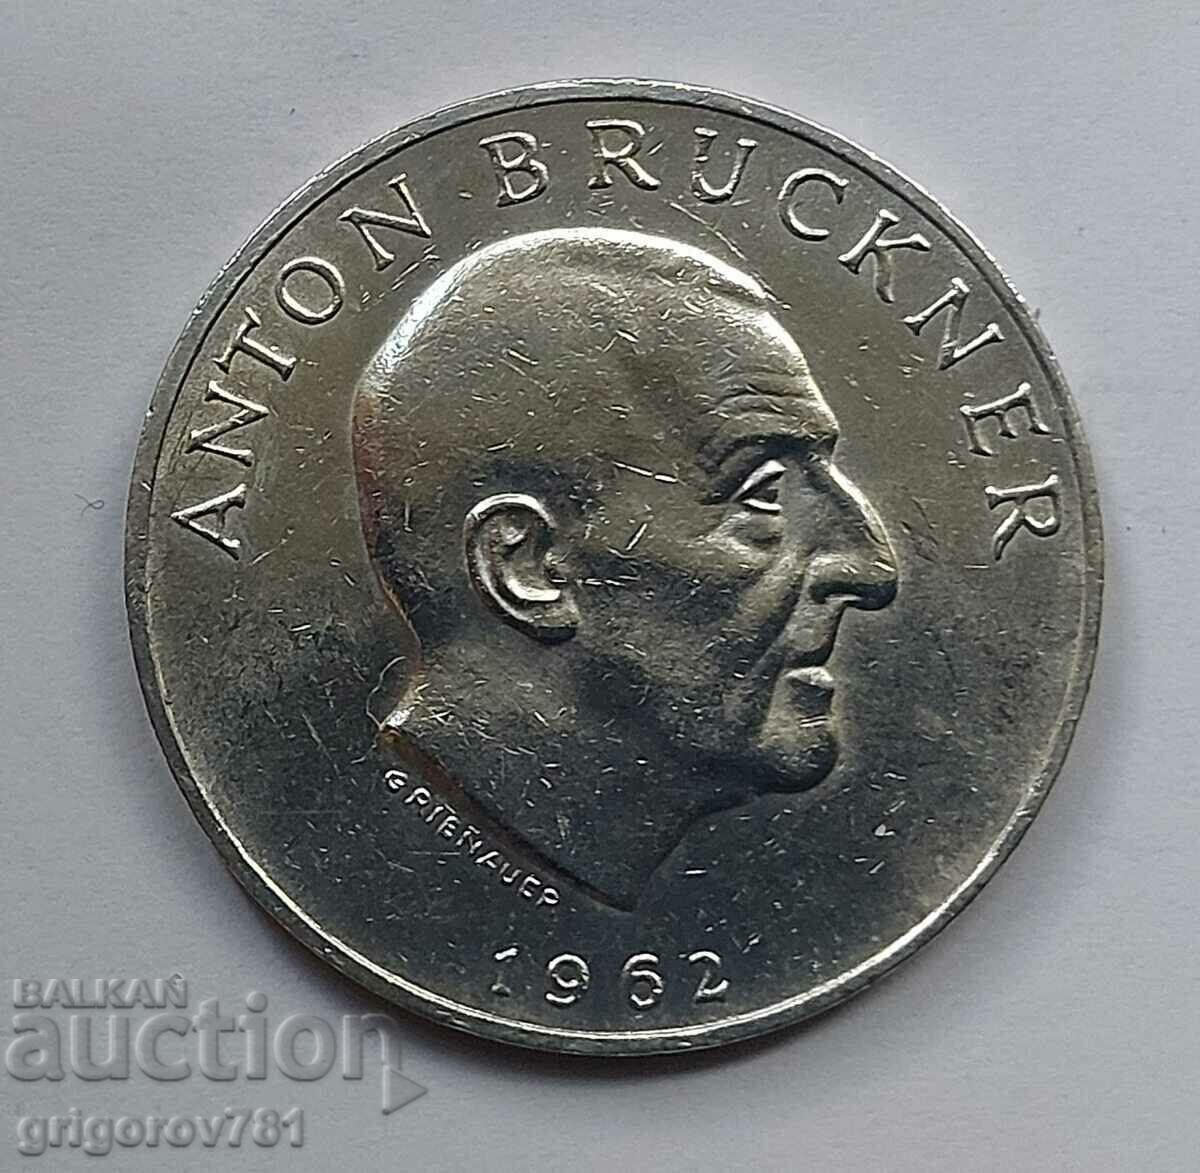 25 Shillings Silver Austria 1962 - Silver Coin #21